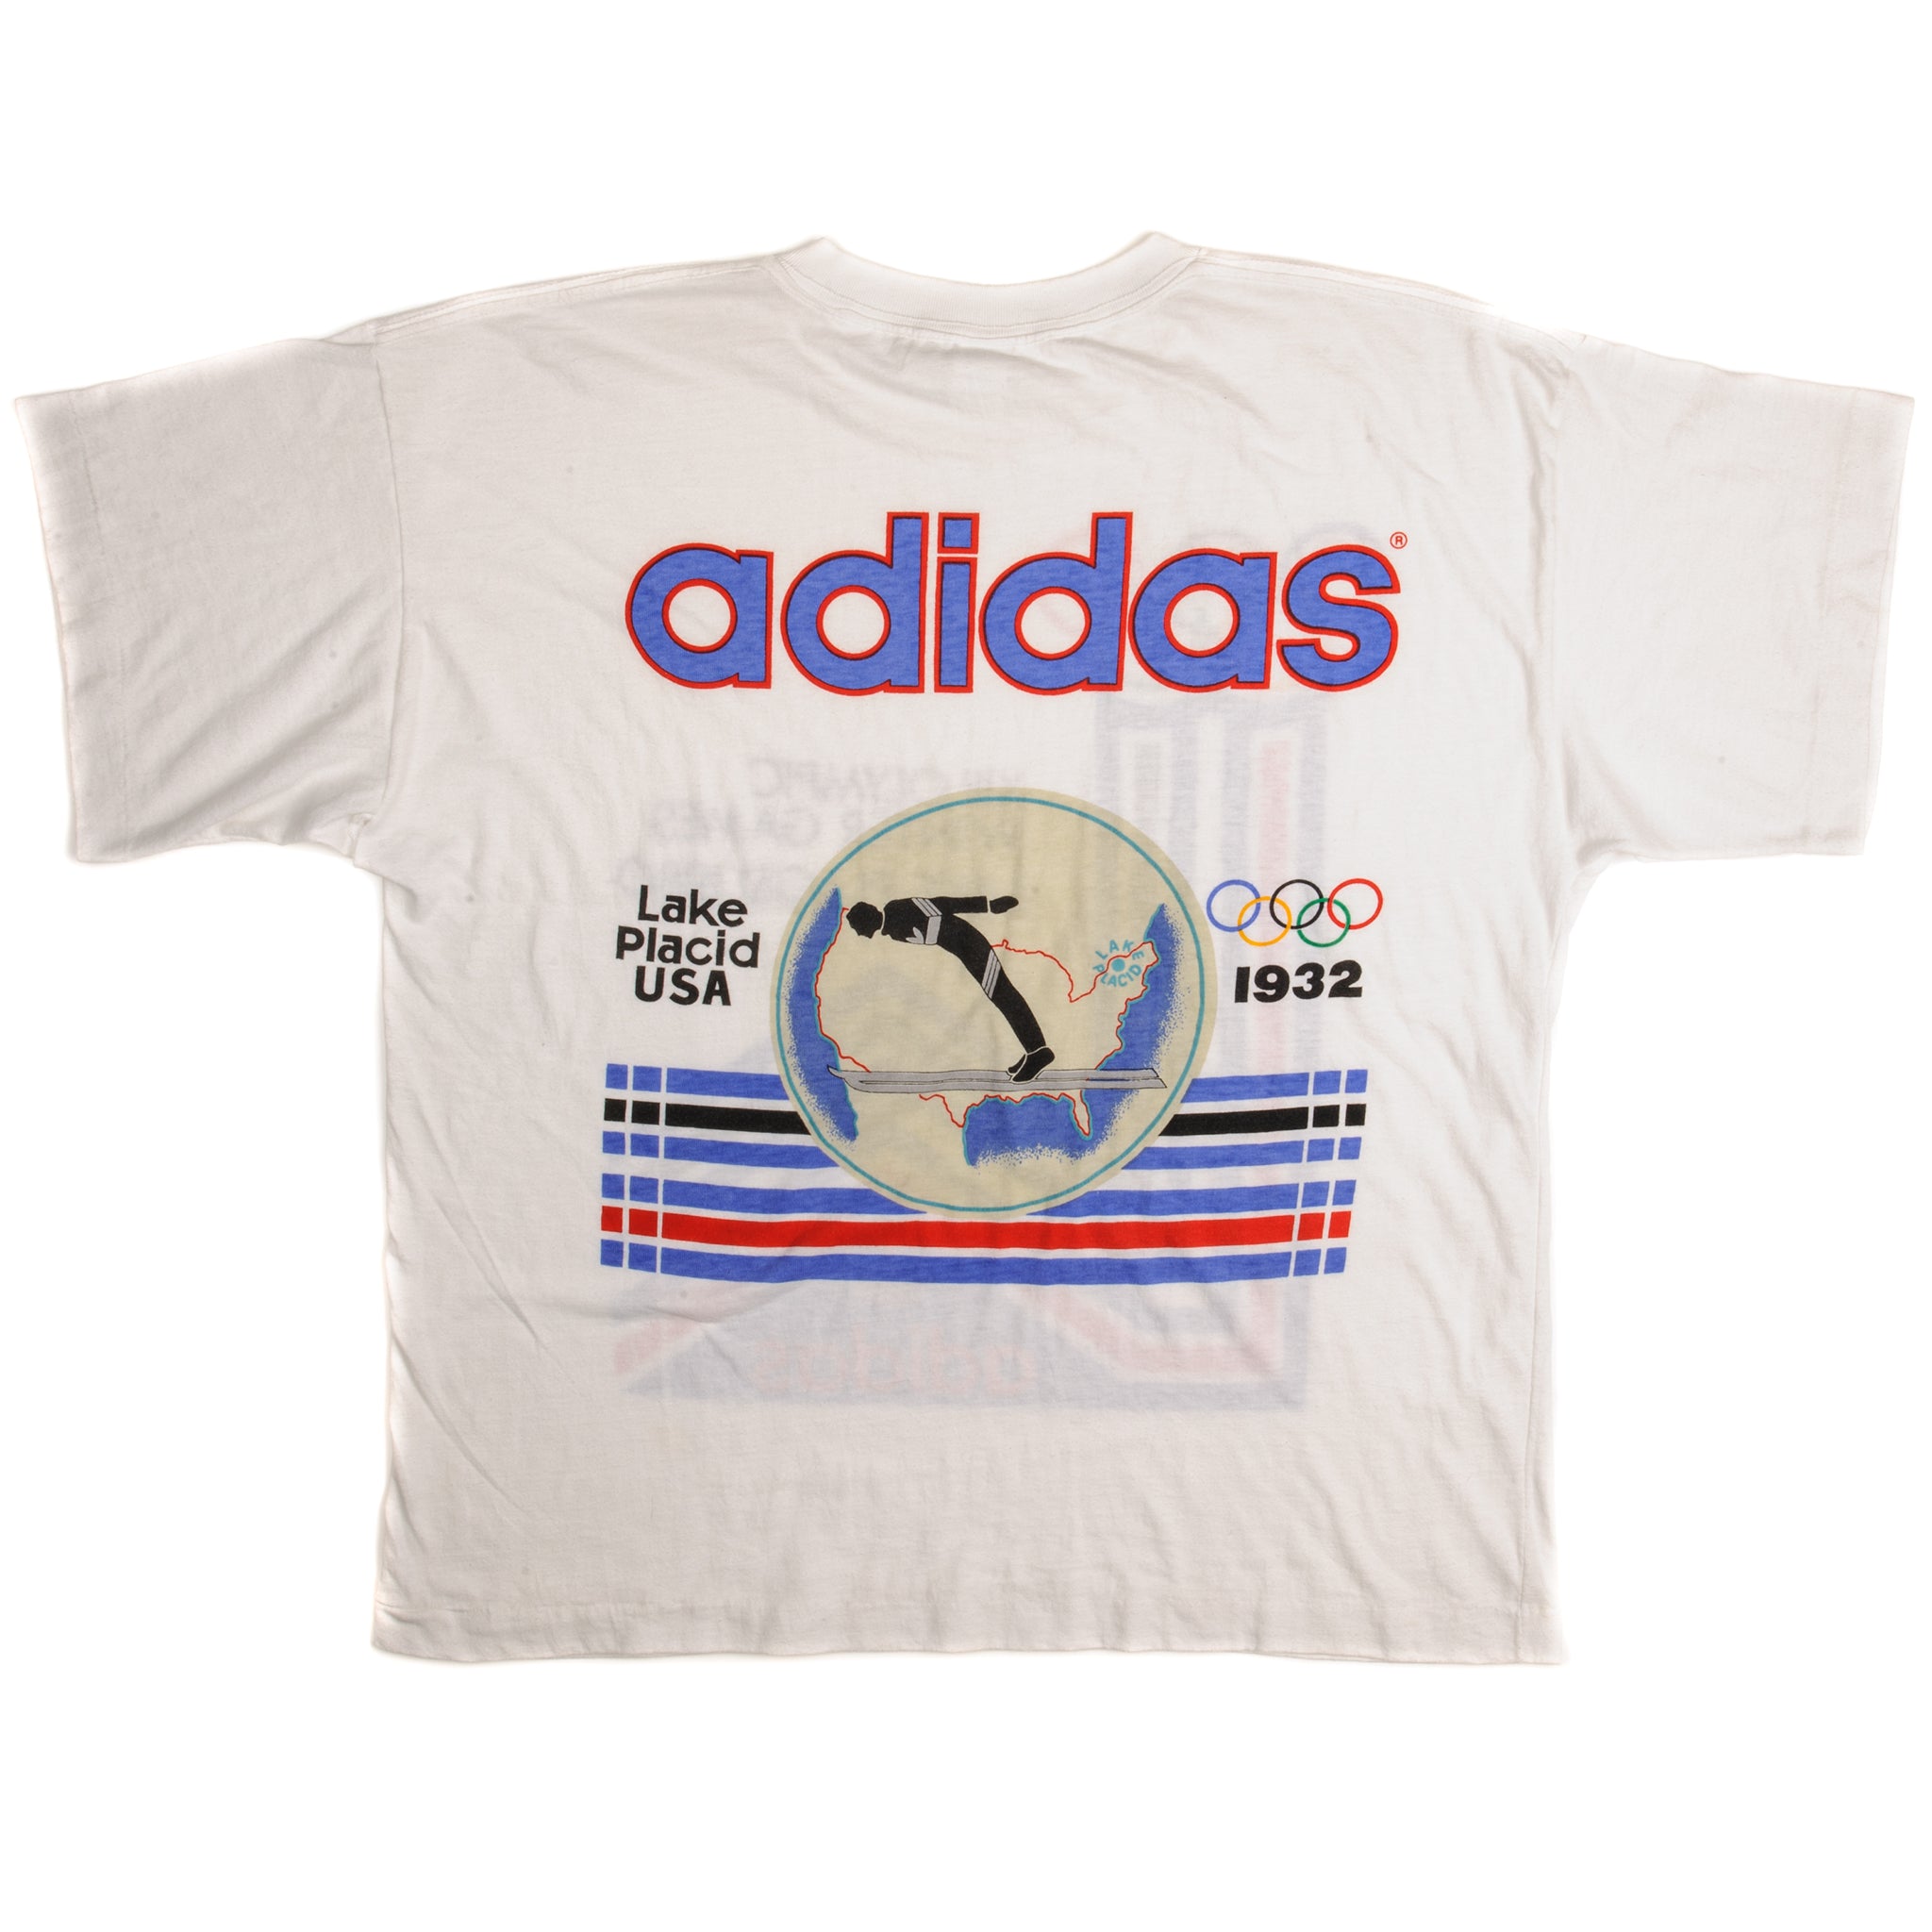 1980’s adidas Game shirts